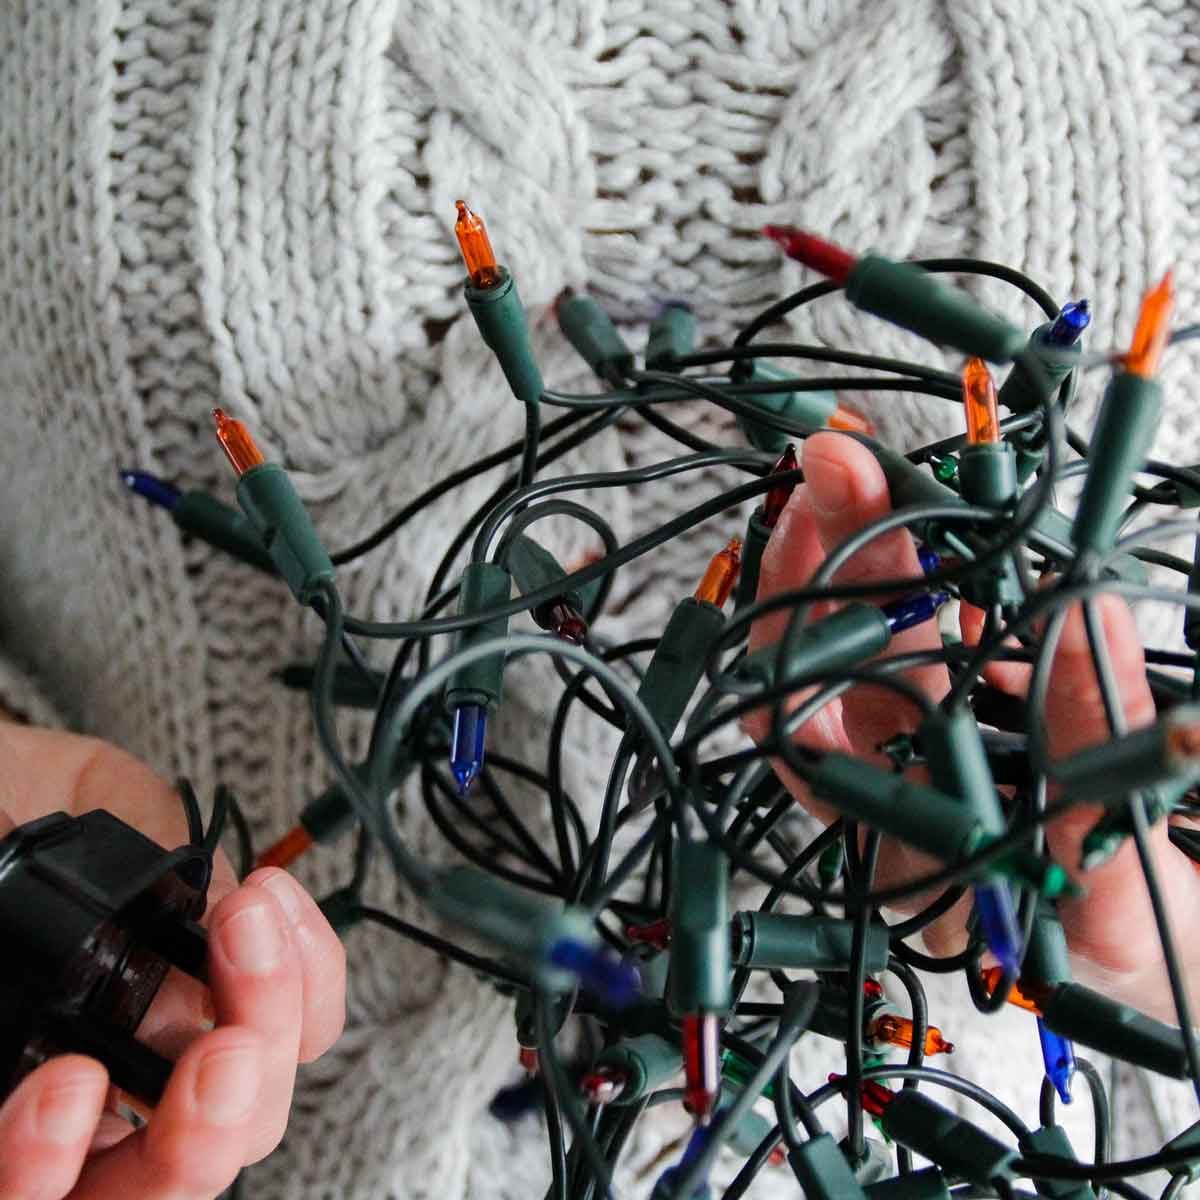 Svane myg charter How to Test, Fix and Change Christmas Lights (DIY) | Family Handyman